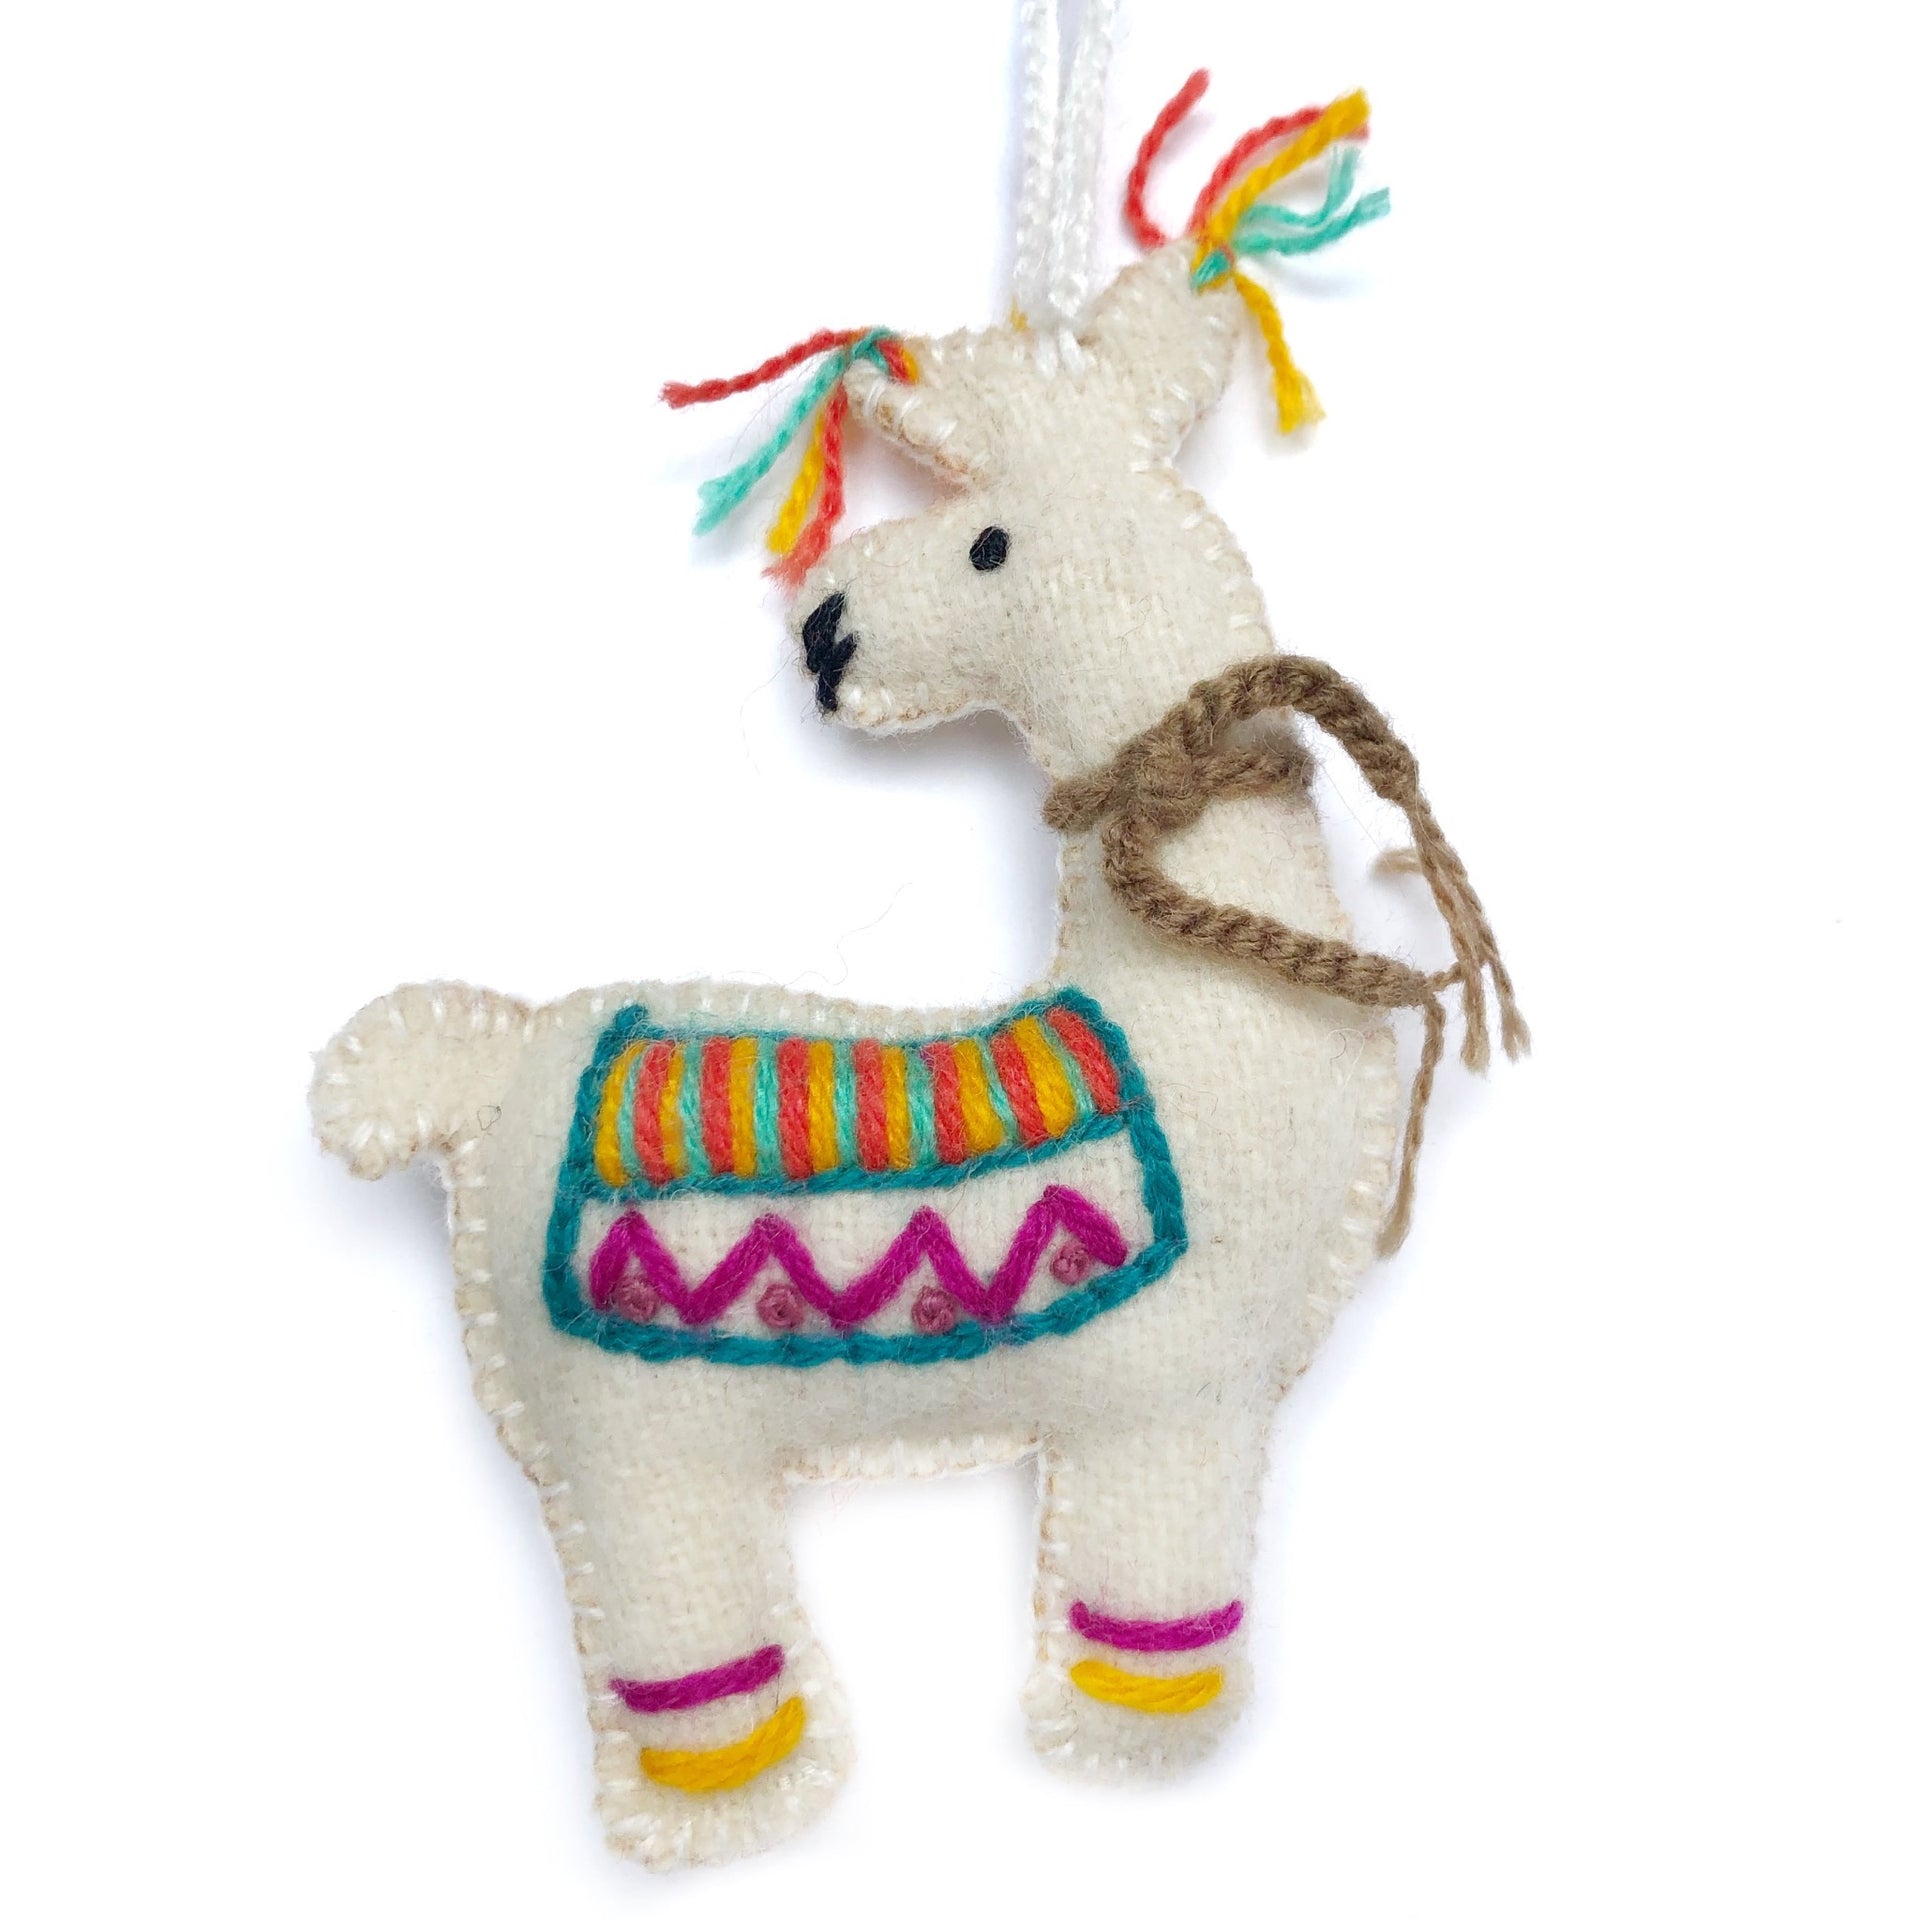 Llama ornament handmade in Peru with fair trade